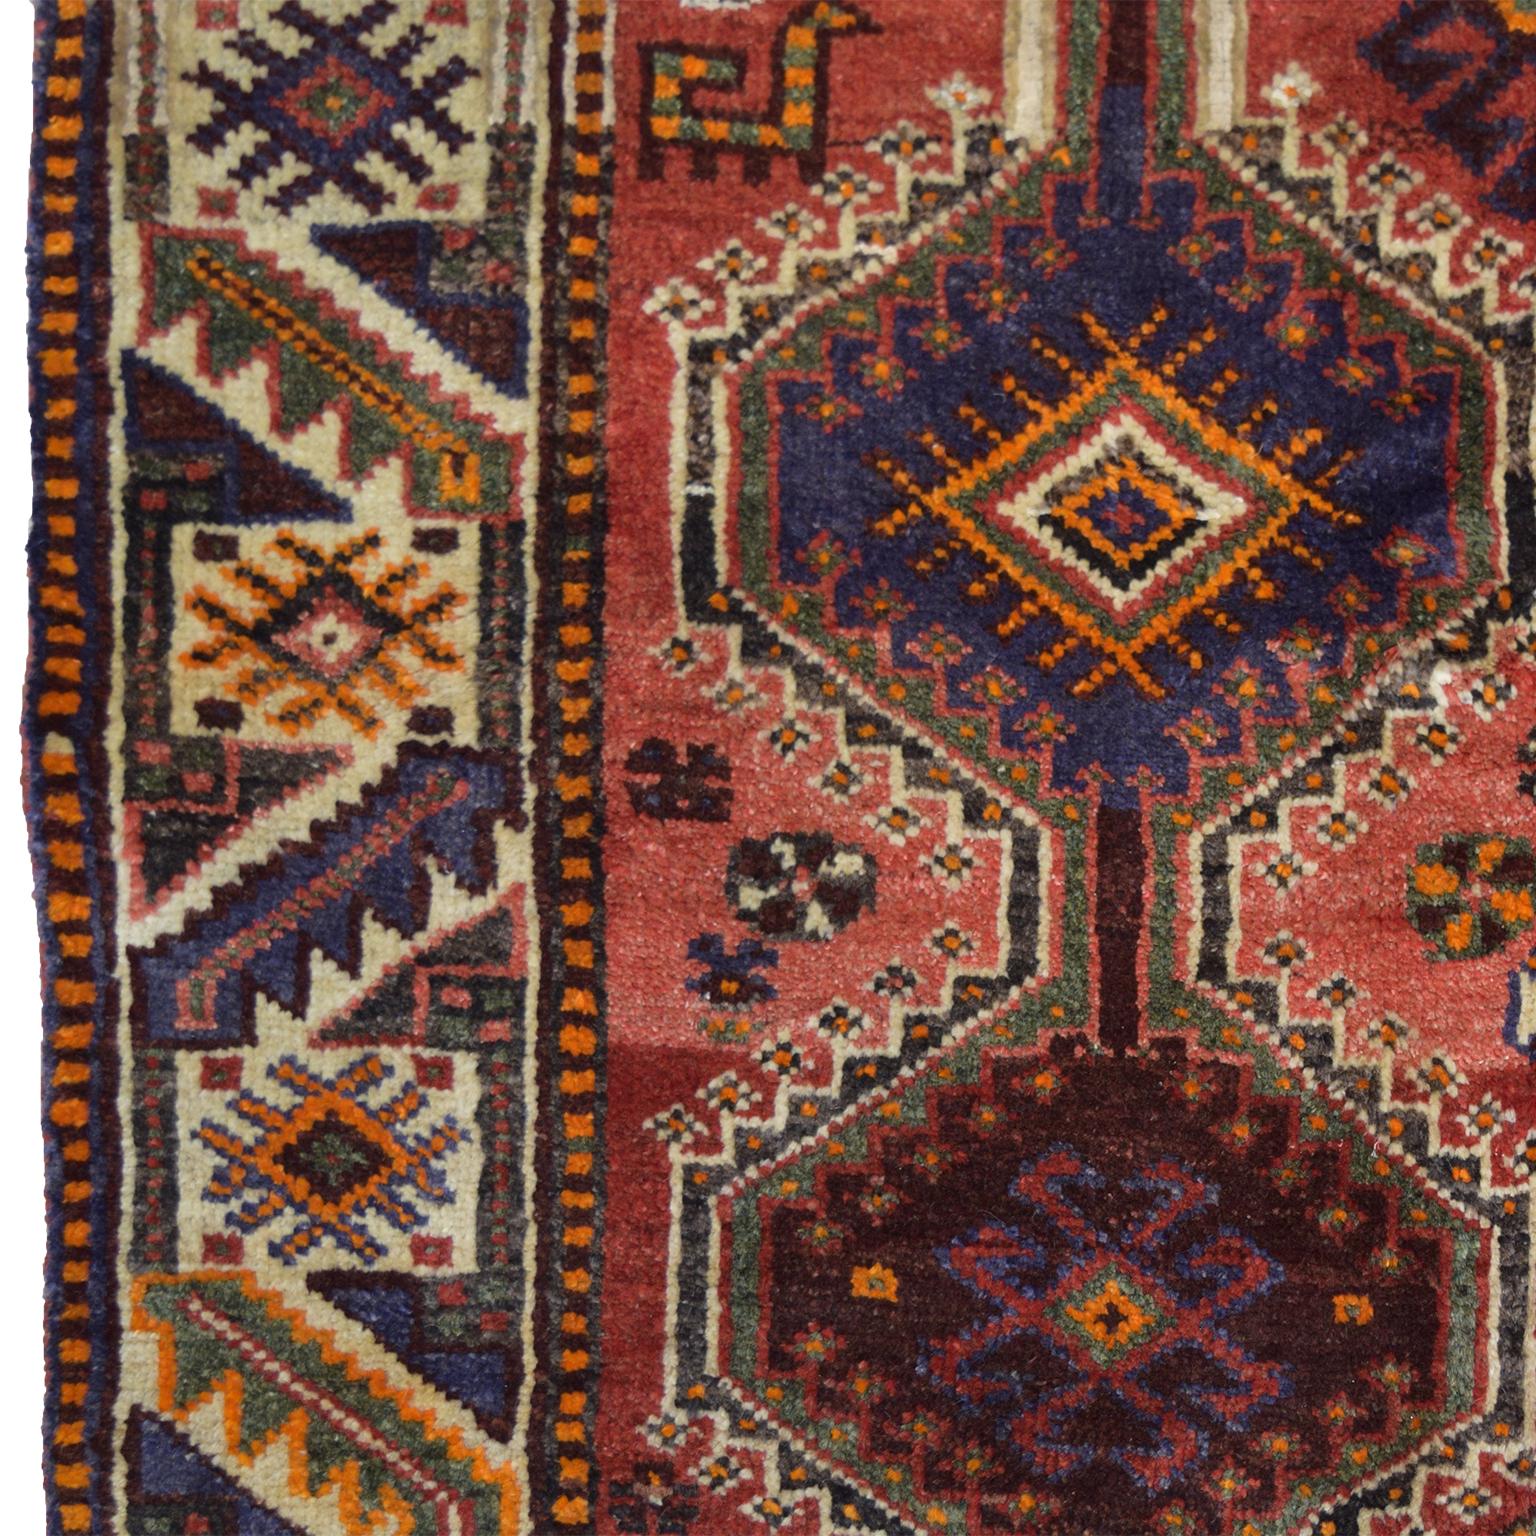 Wool Vintage 1940s Persian Qashqai Tribal Rug, Pink, Red & Cream, 5x8